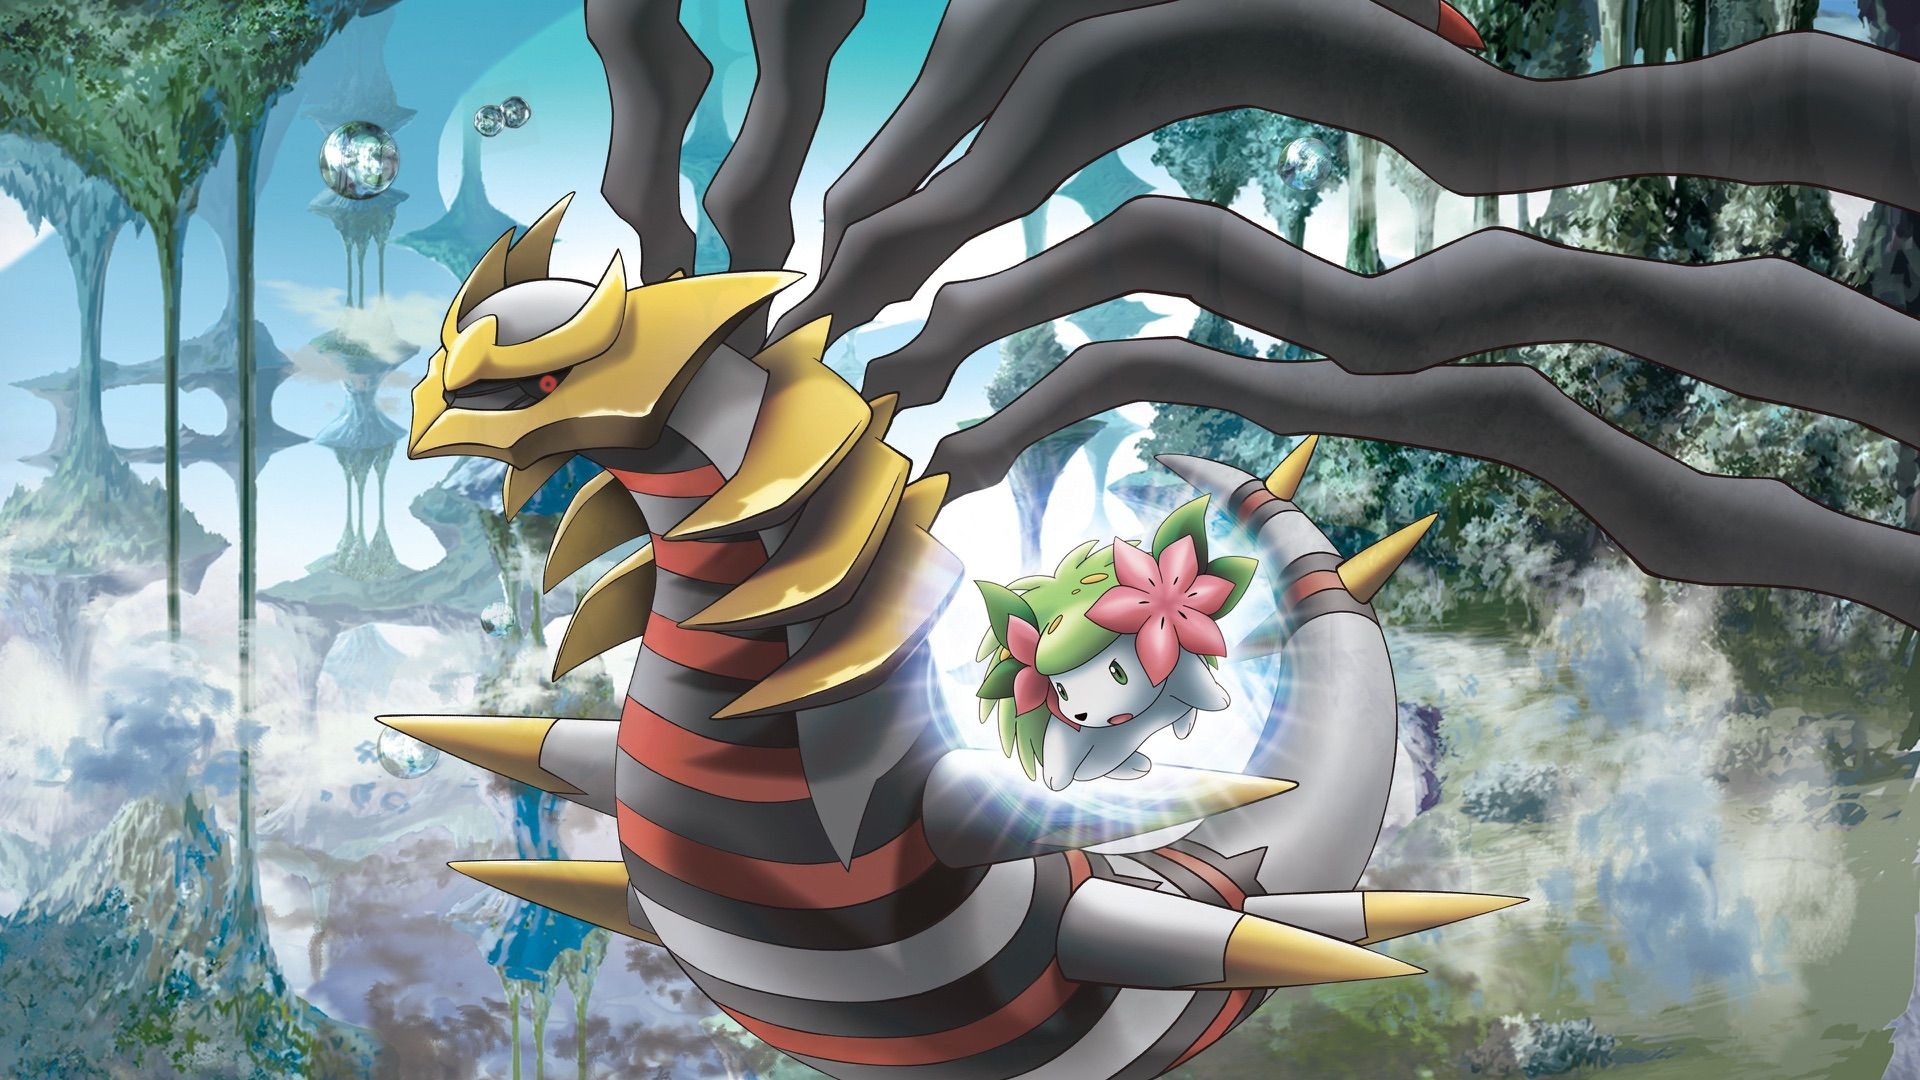 Pokémon: Giratina and the Sky Warrior background